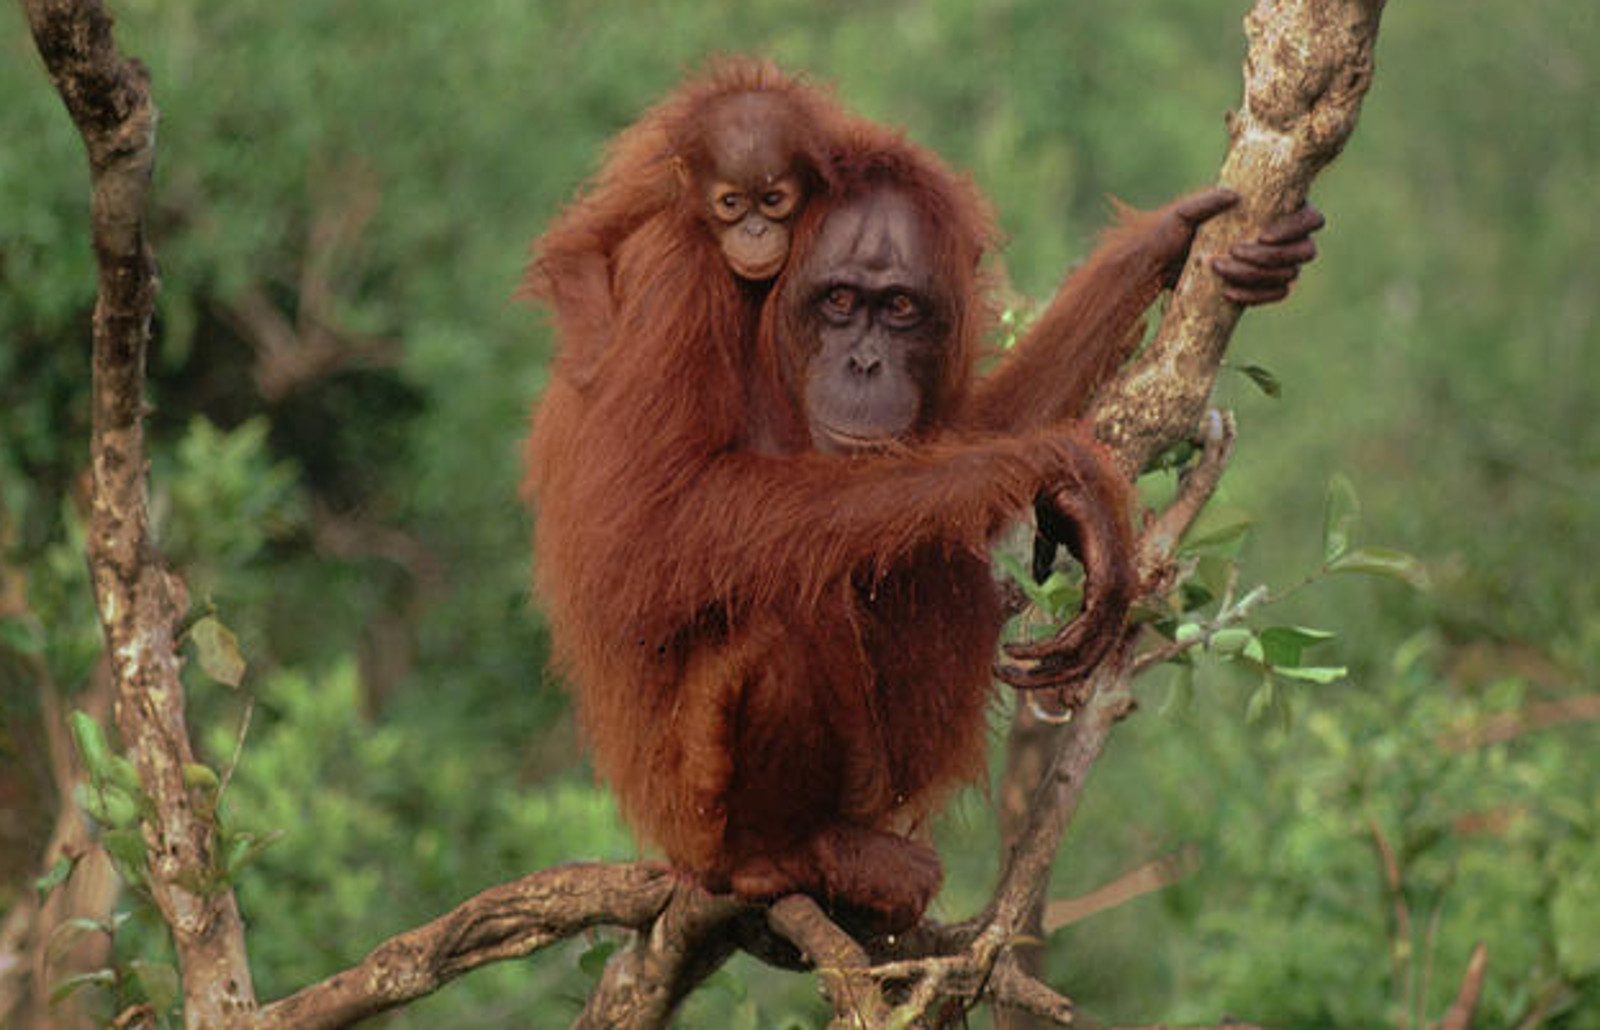 Orangutan holding their baby